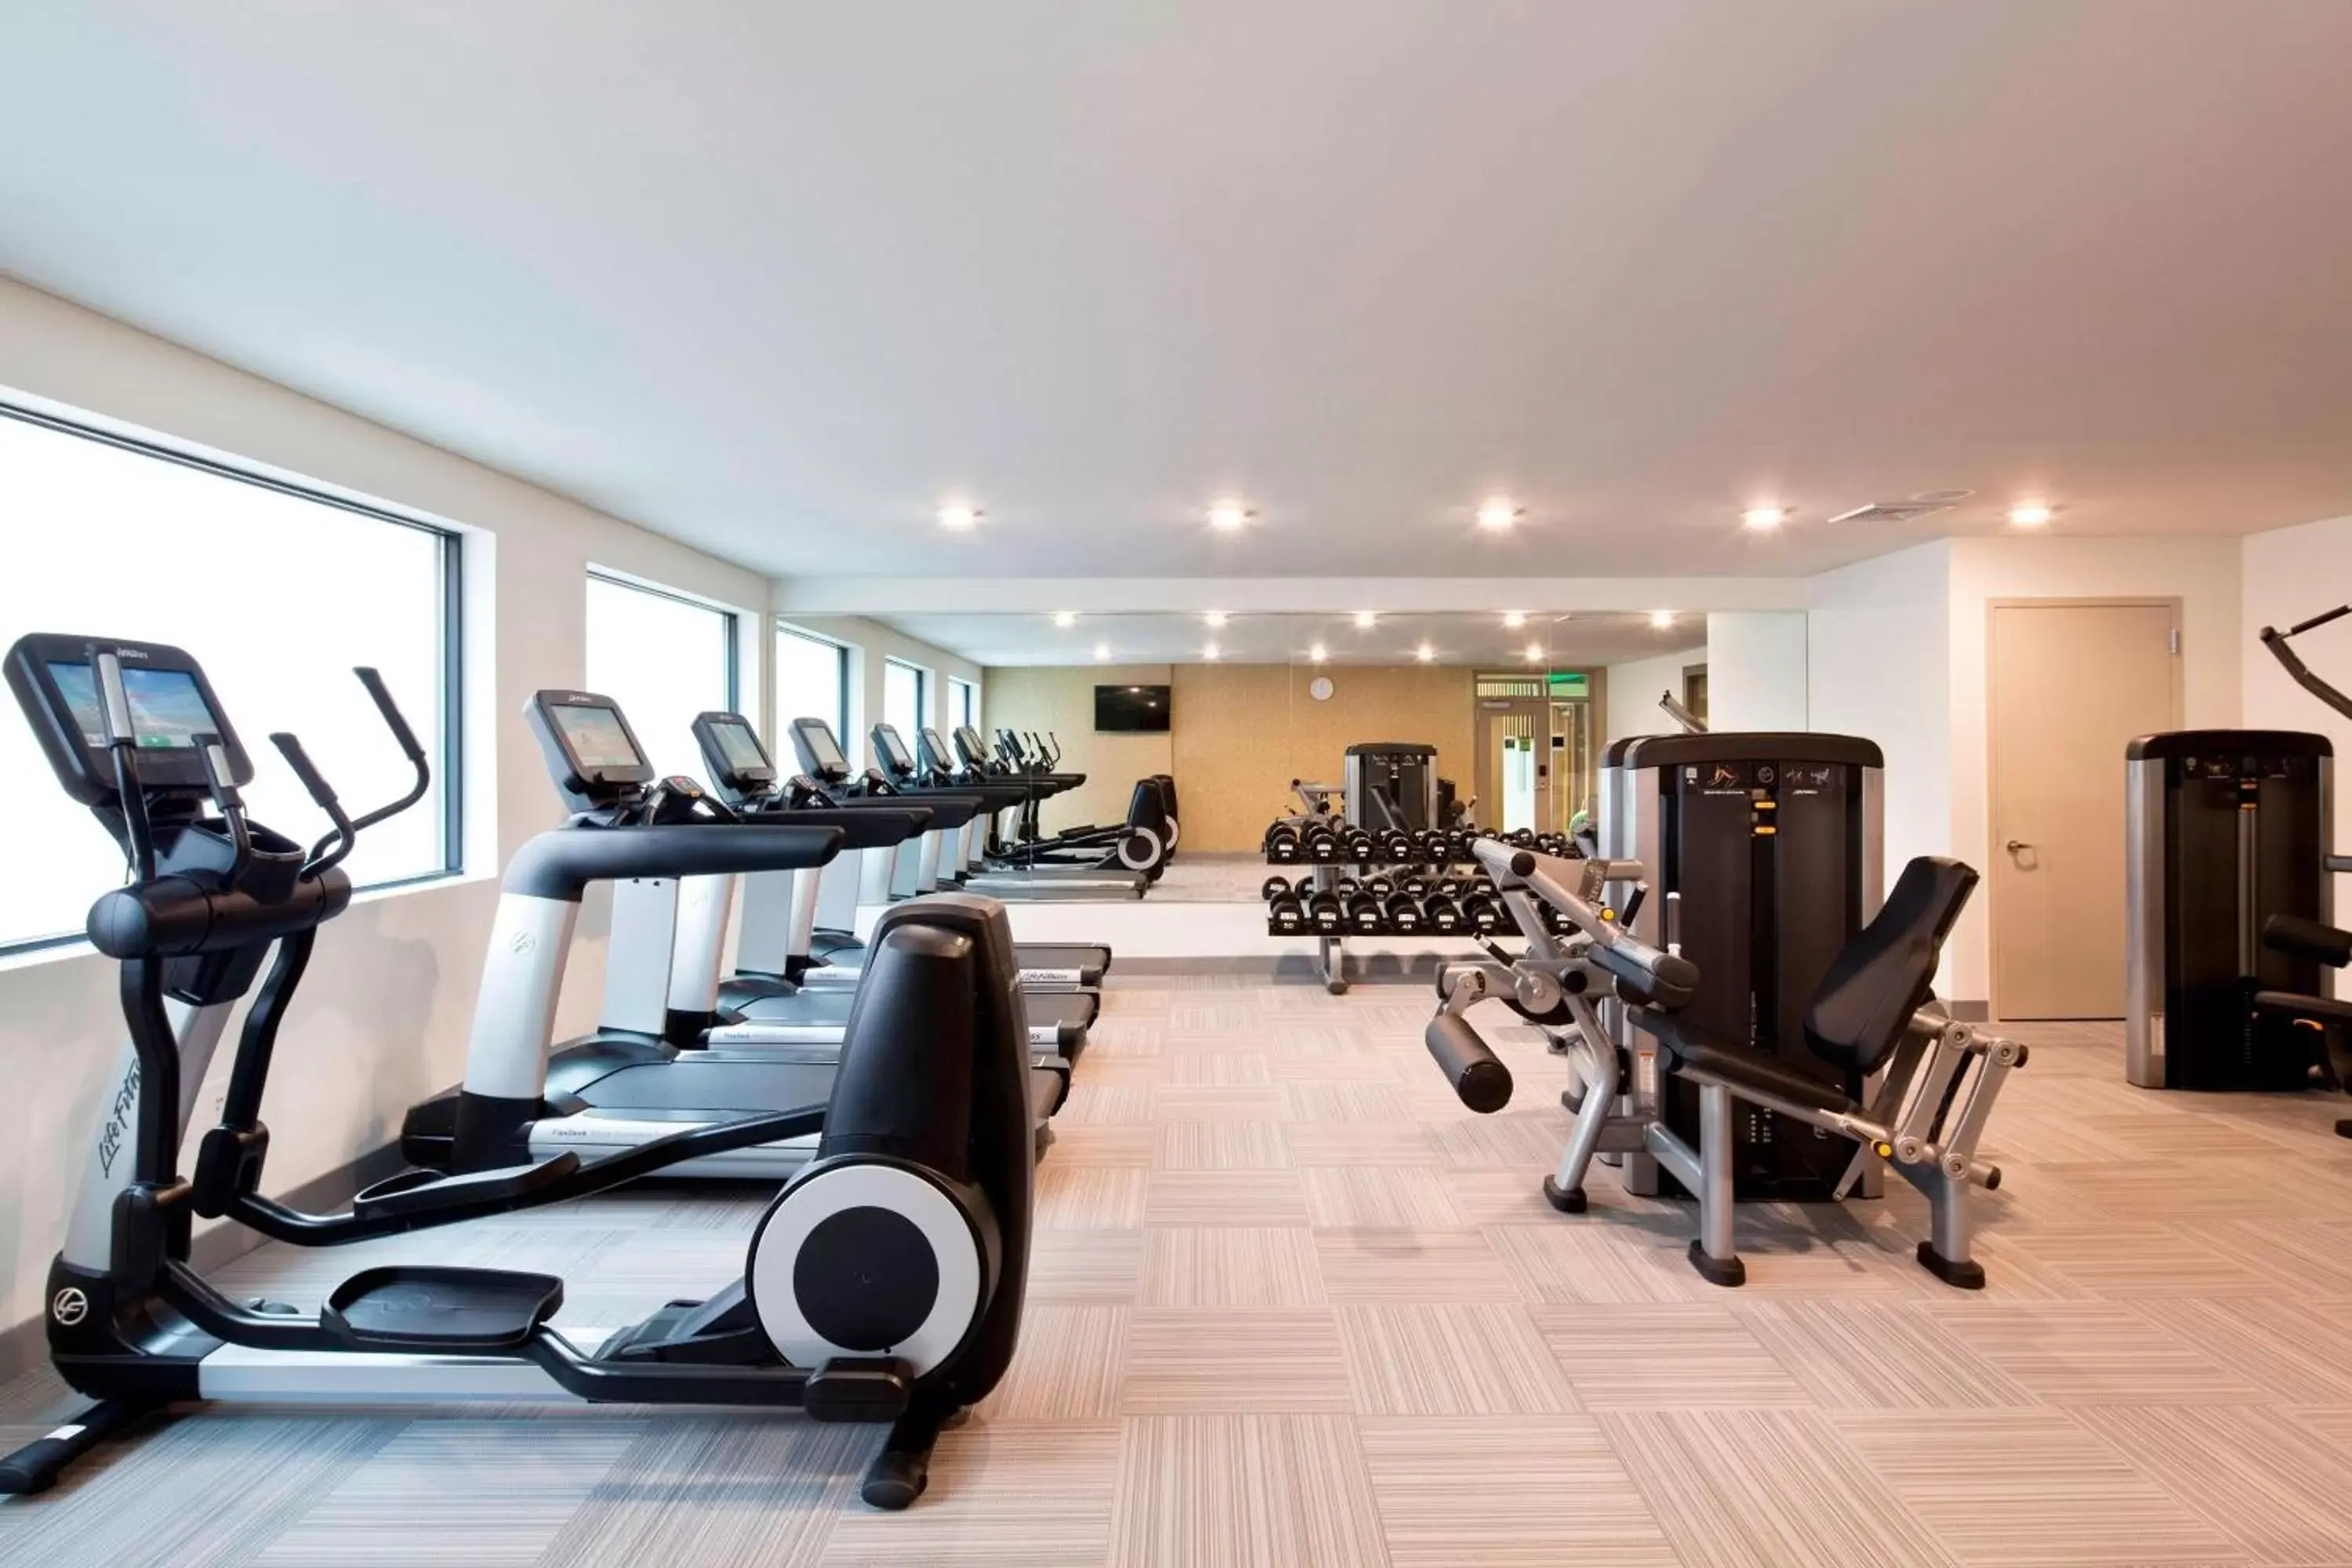 Fitness centre/facilities, Fitness Center/Facilities in Element Harrison-Newark